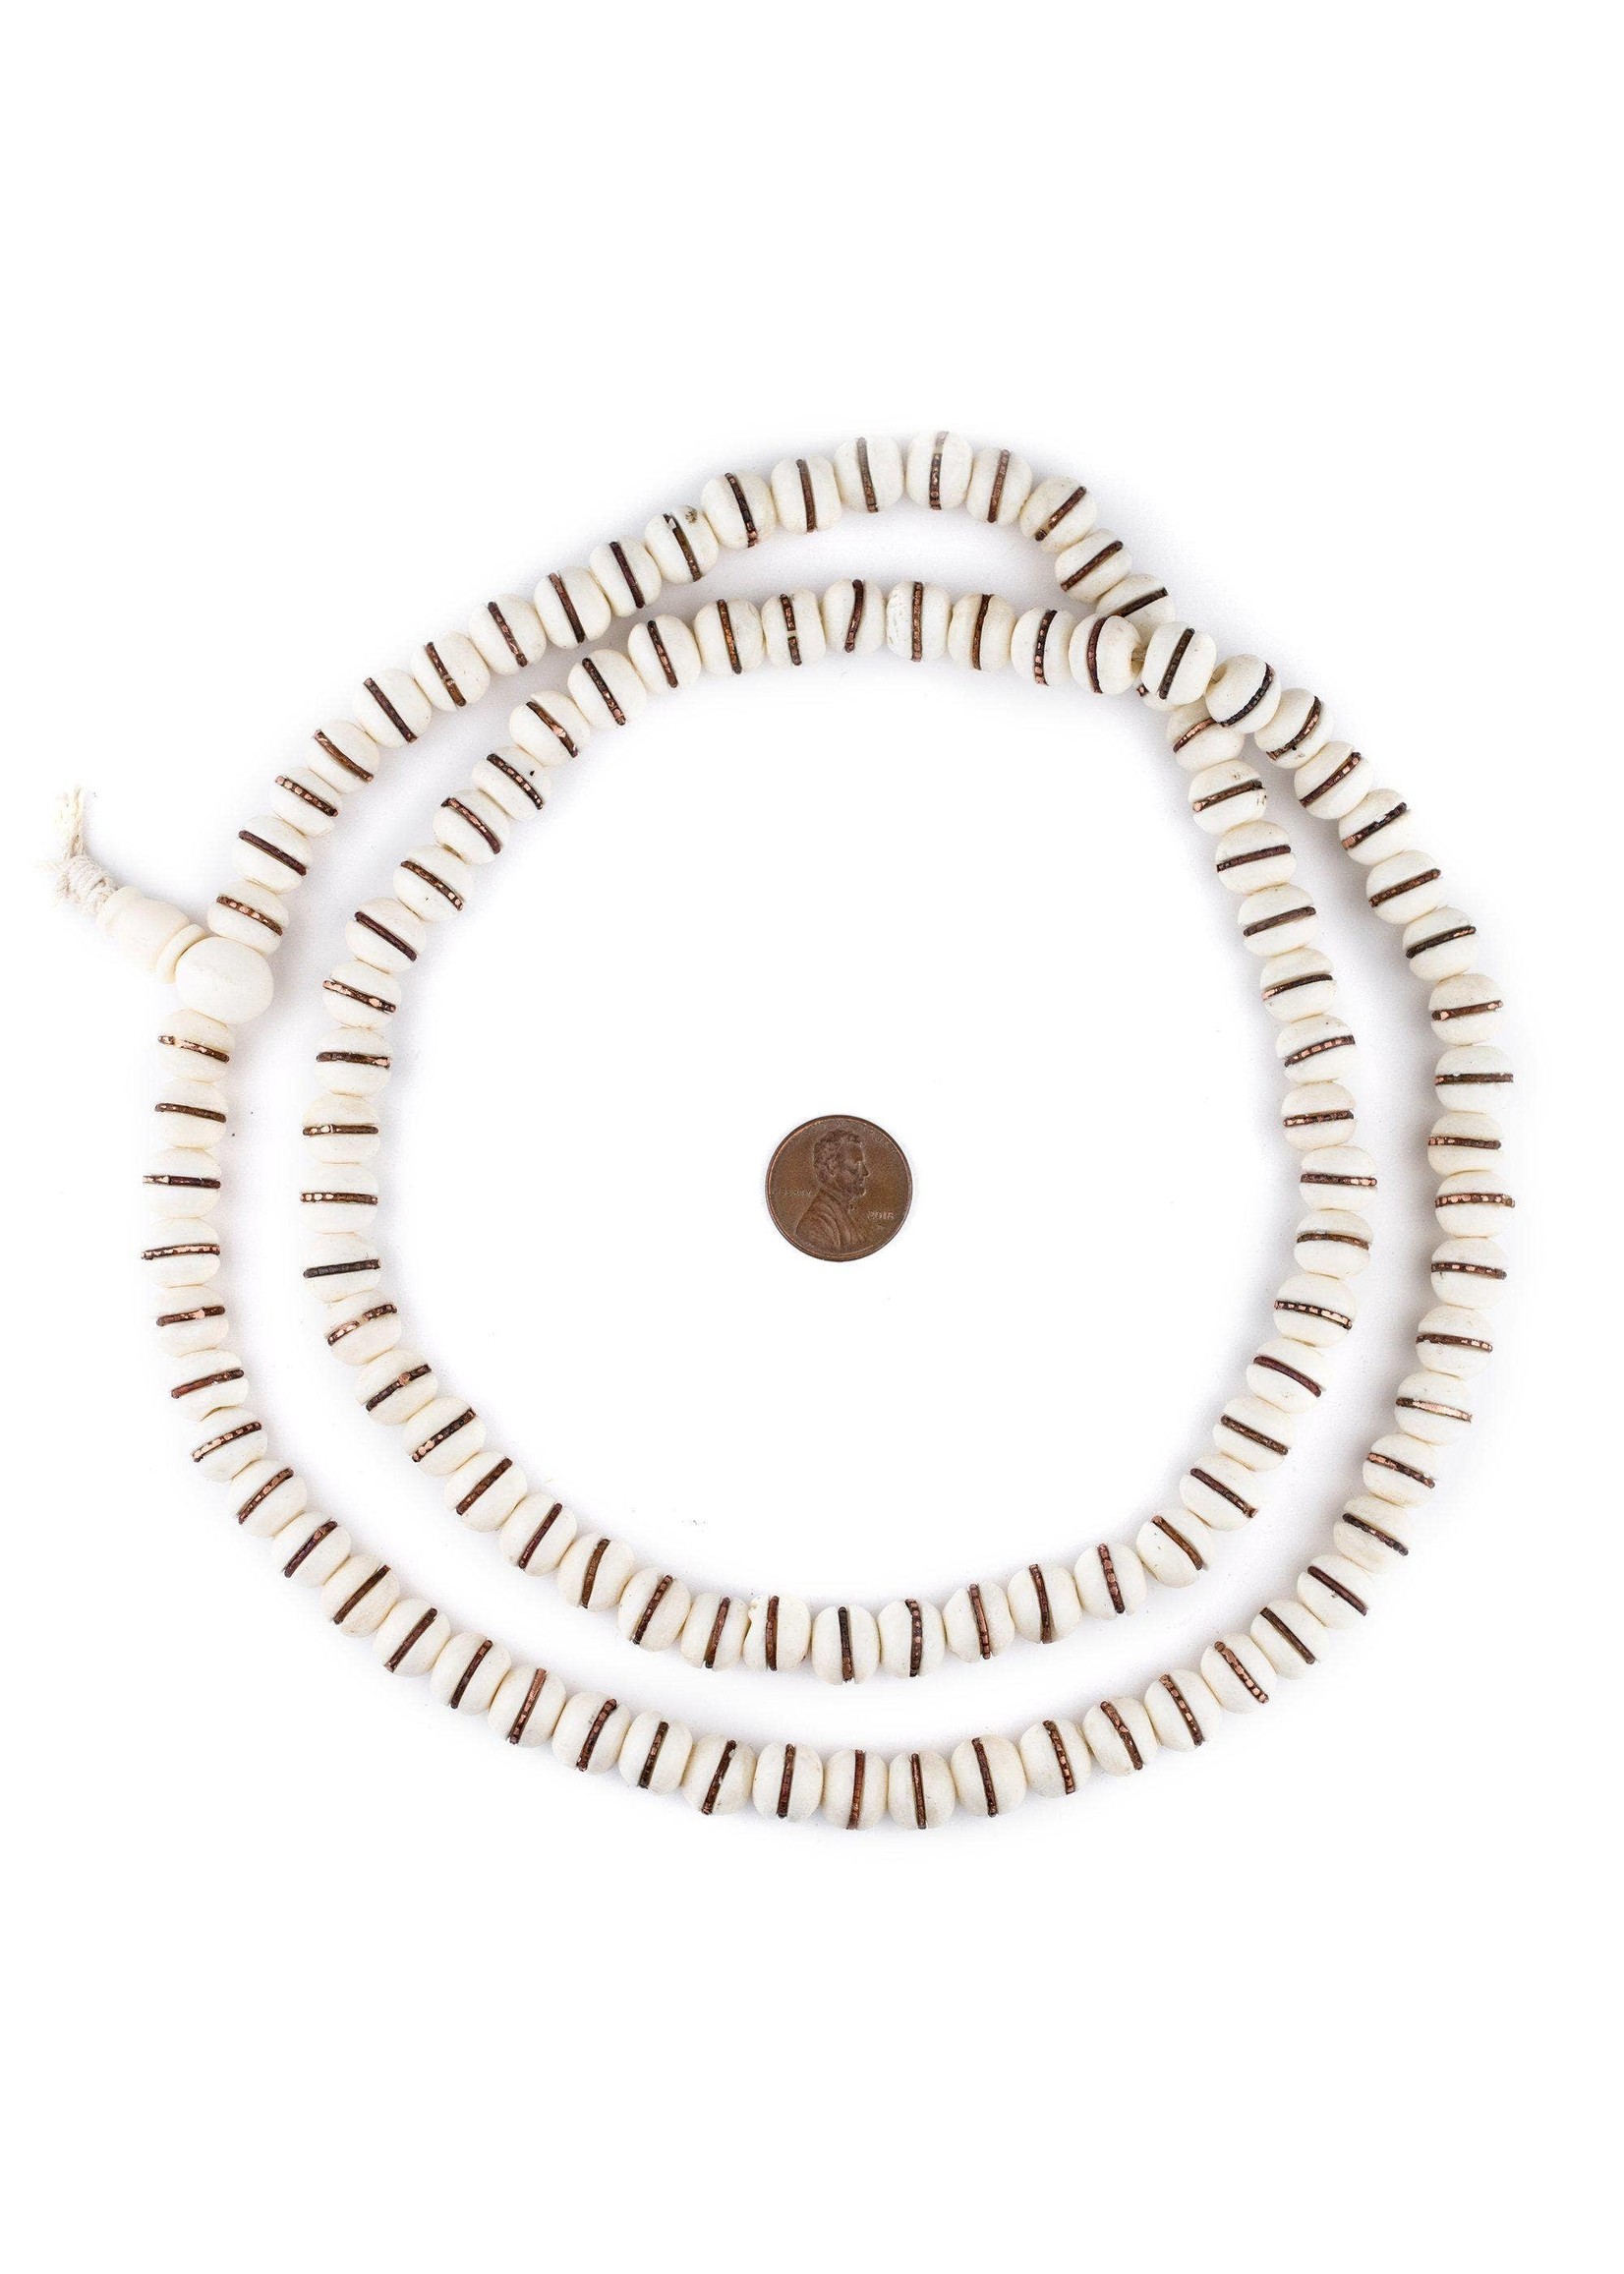 10mm Copper-Inlaid White Bone Mala Beads